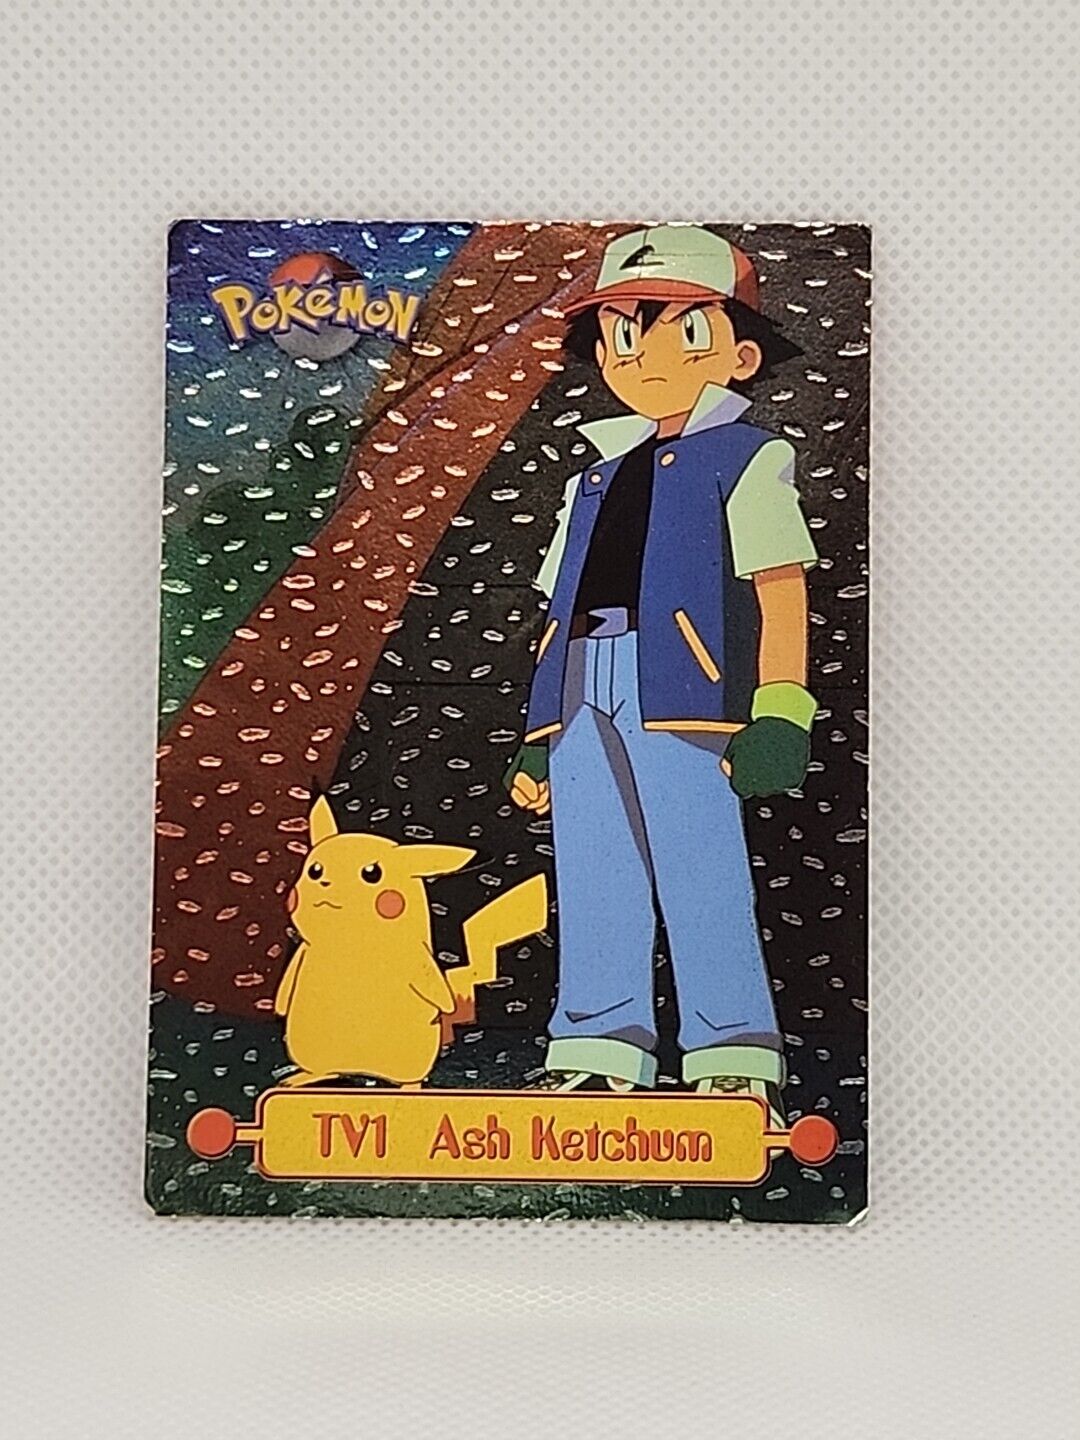 1999 Topps Pokémon Ash Ketchum Card W/ Pikachu TV1